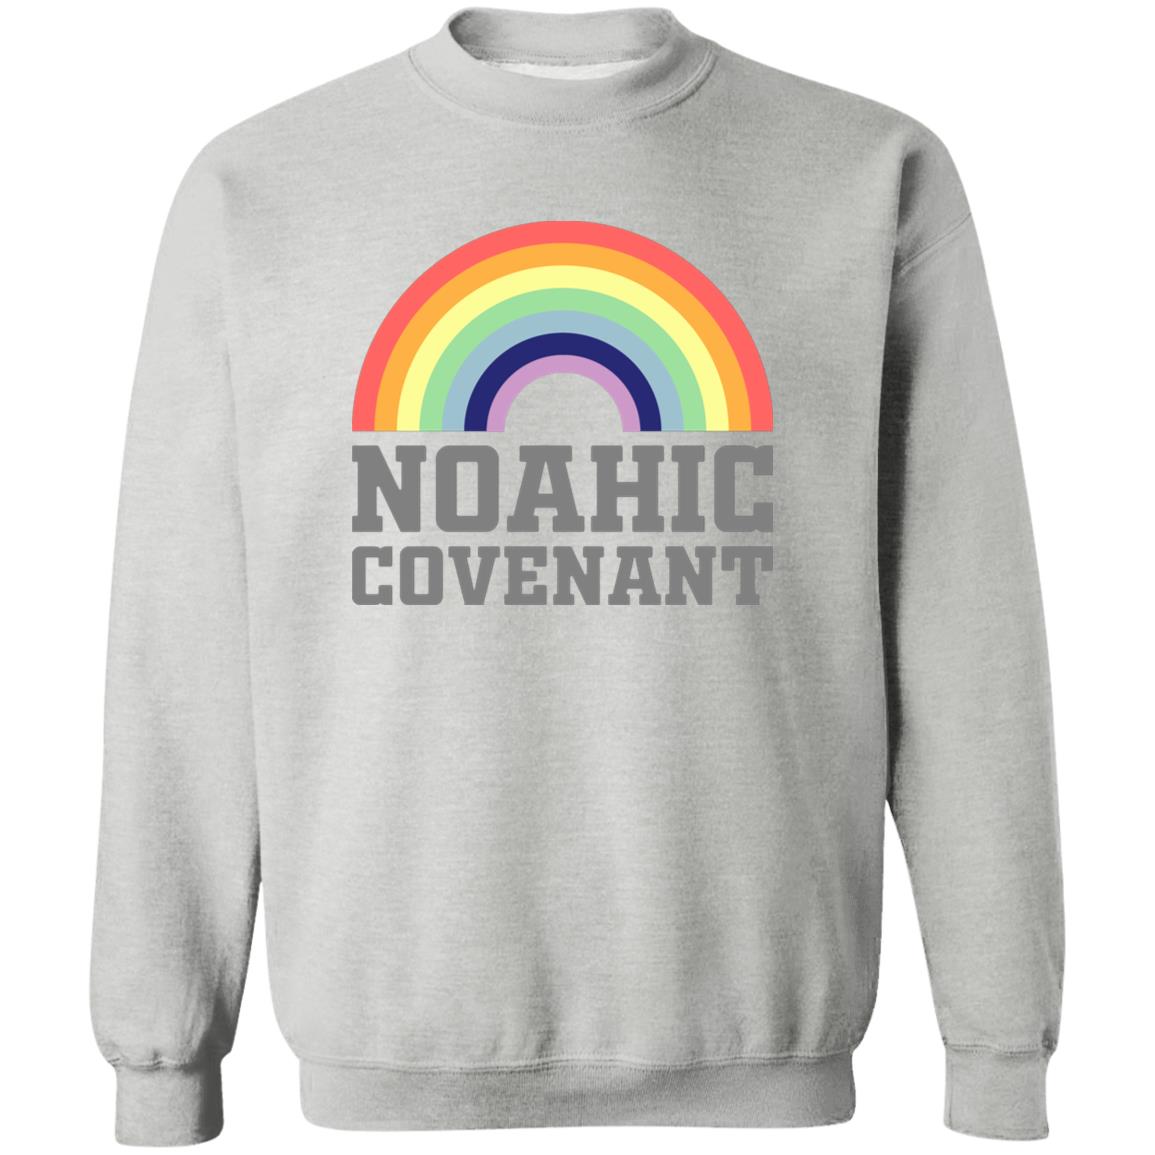 Noahic Covenant (Unisex Sweatshirt)